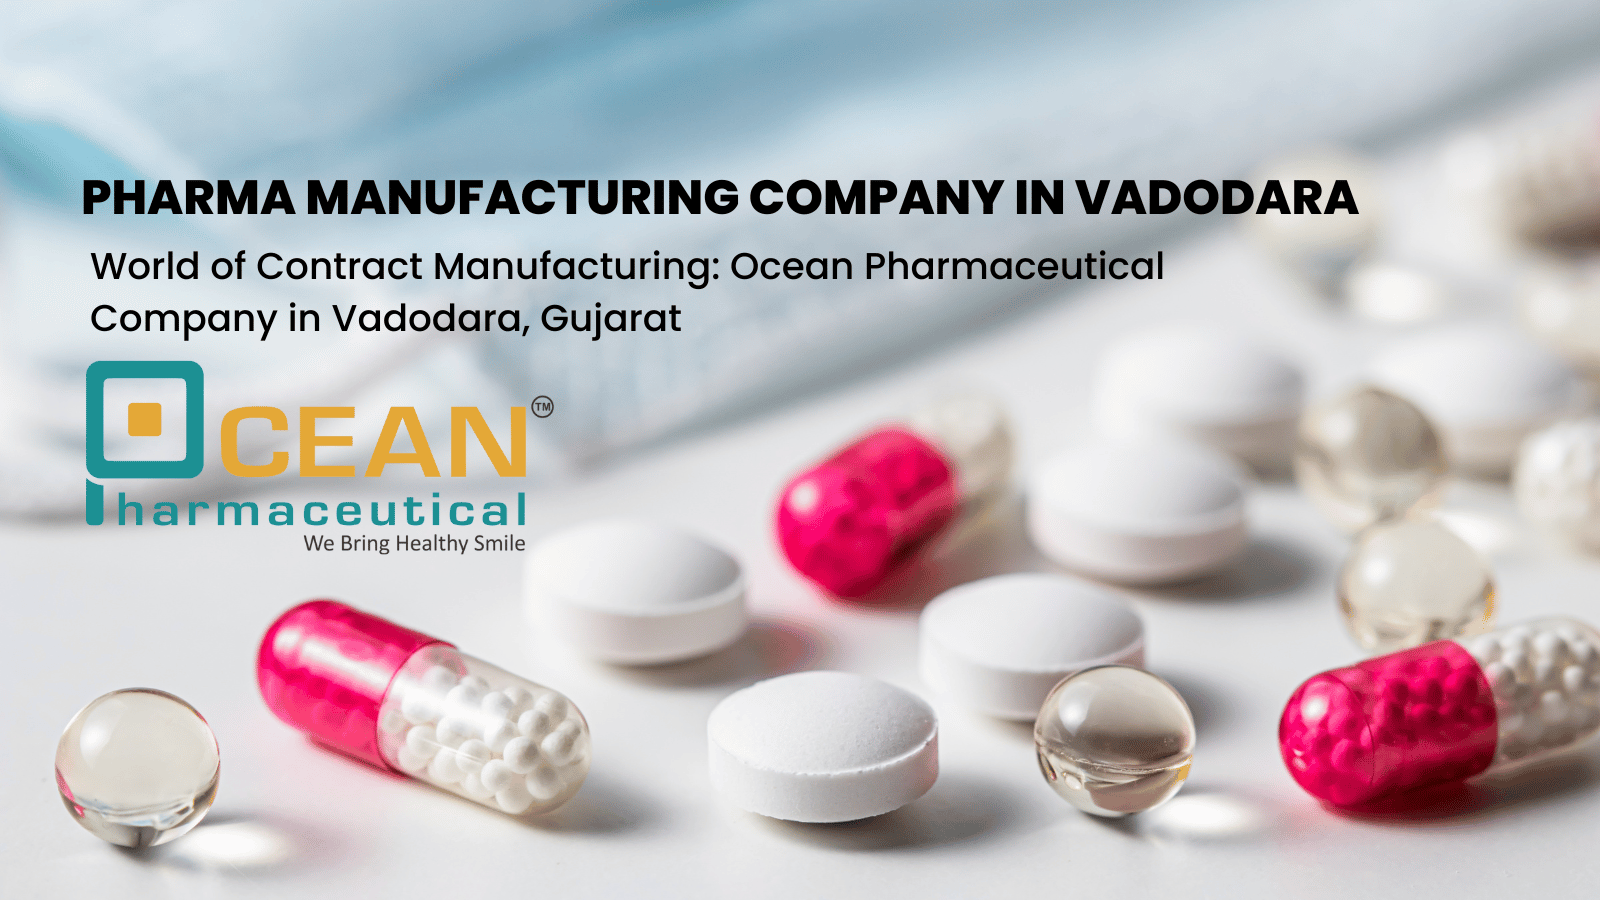 Ocean Pharmaceutical Company in Vadodara, Gujarat